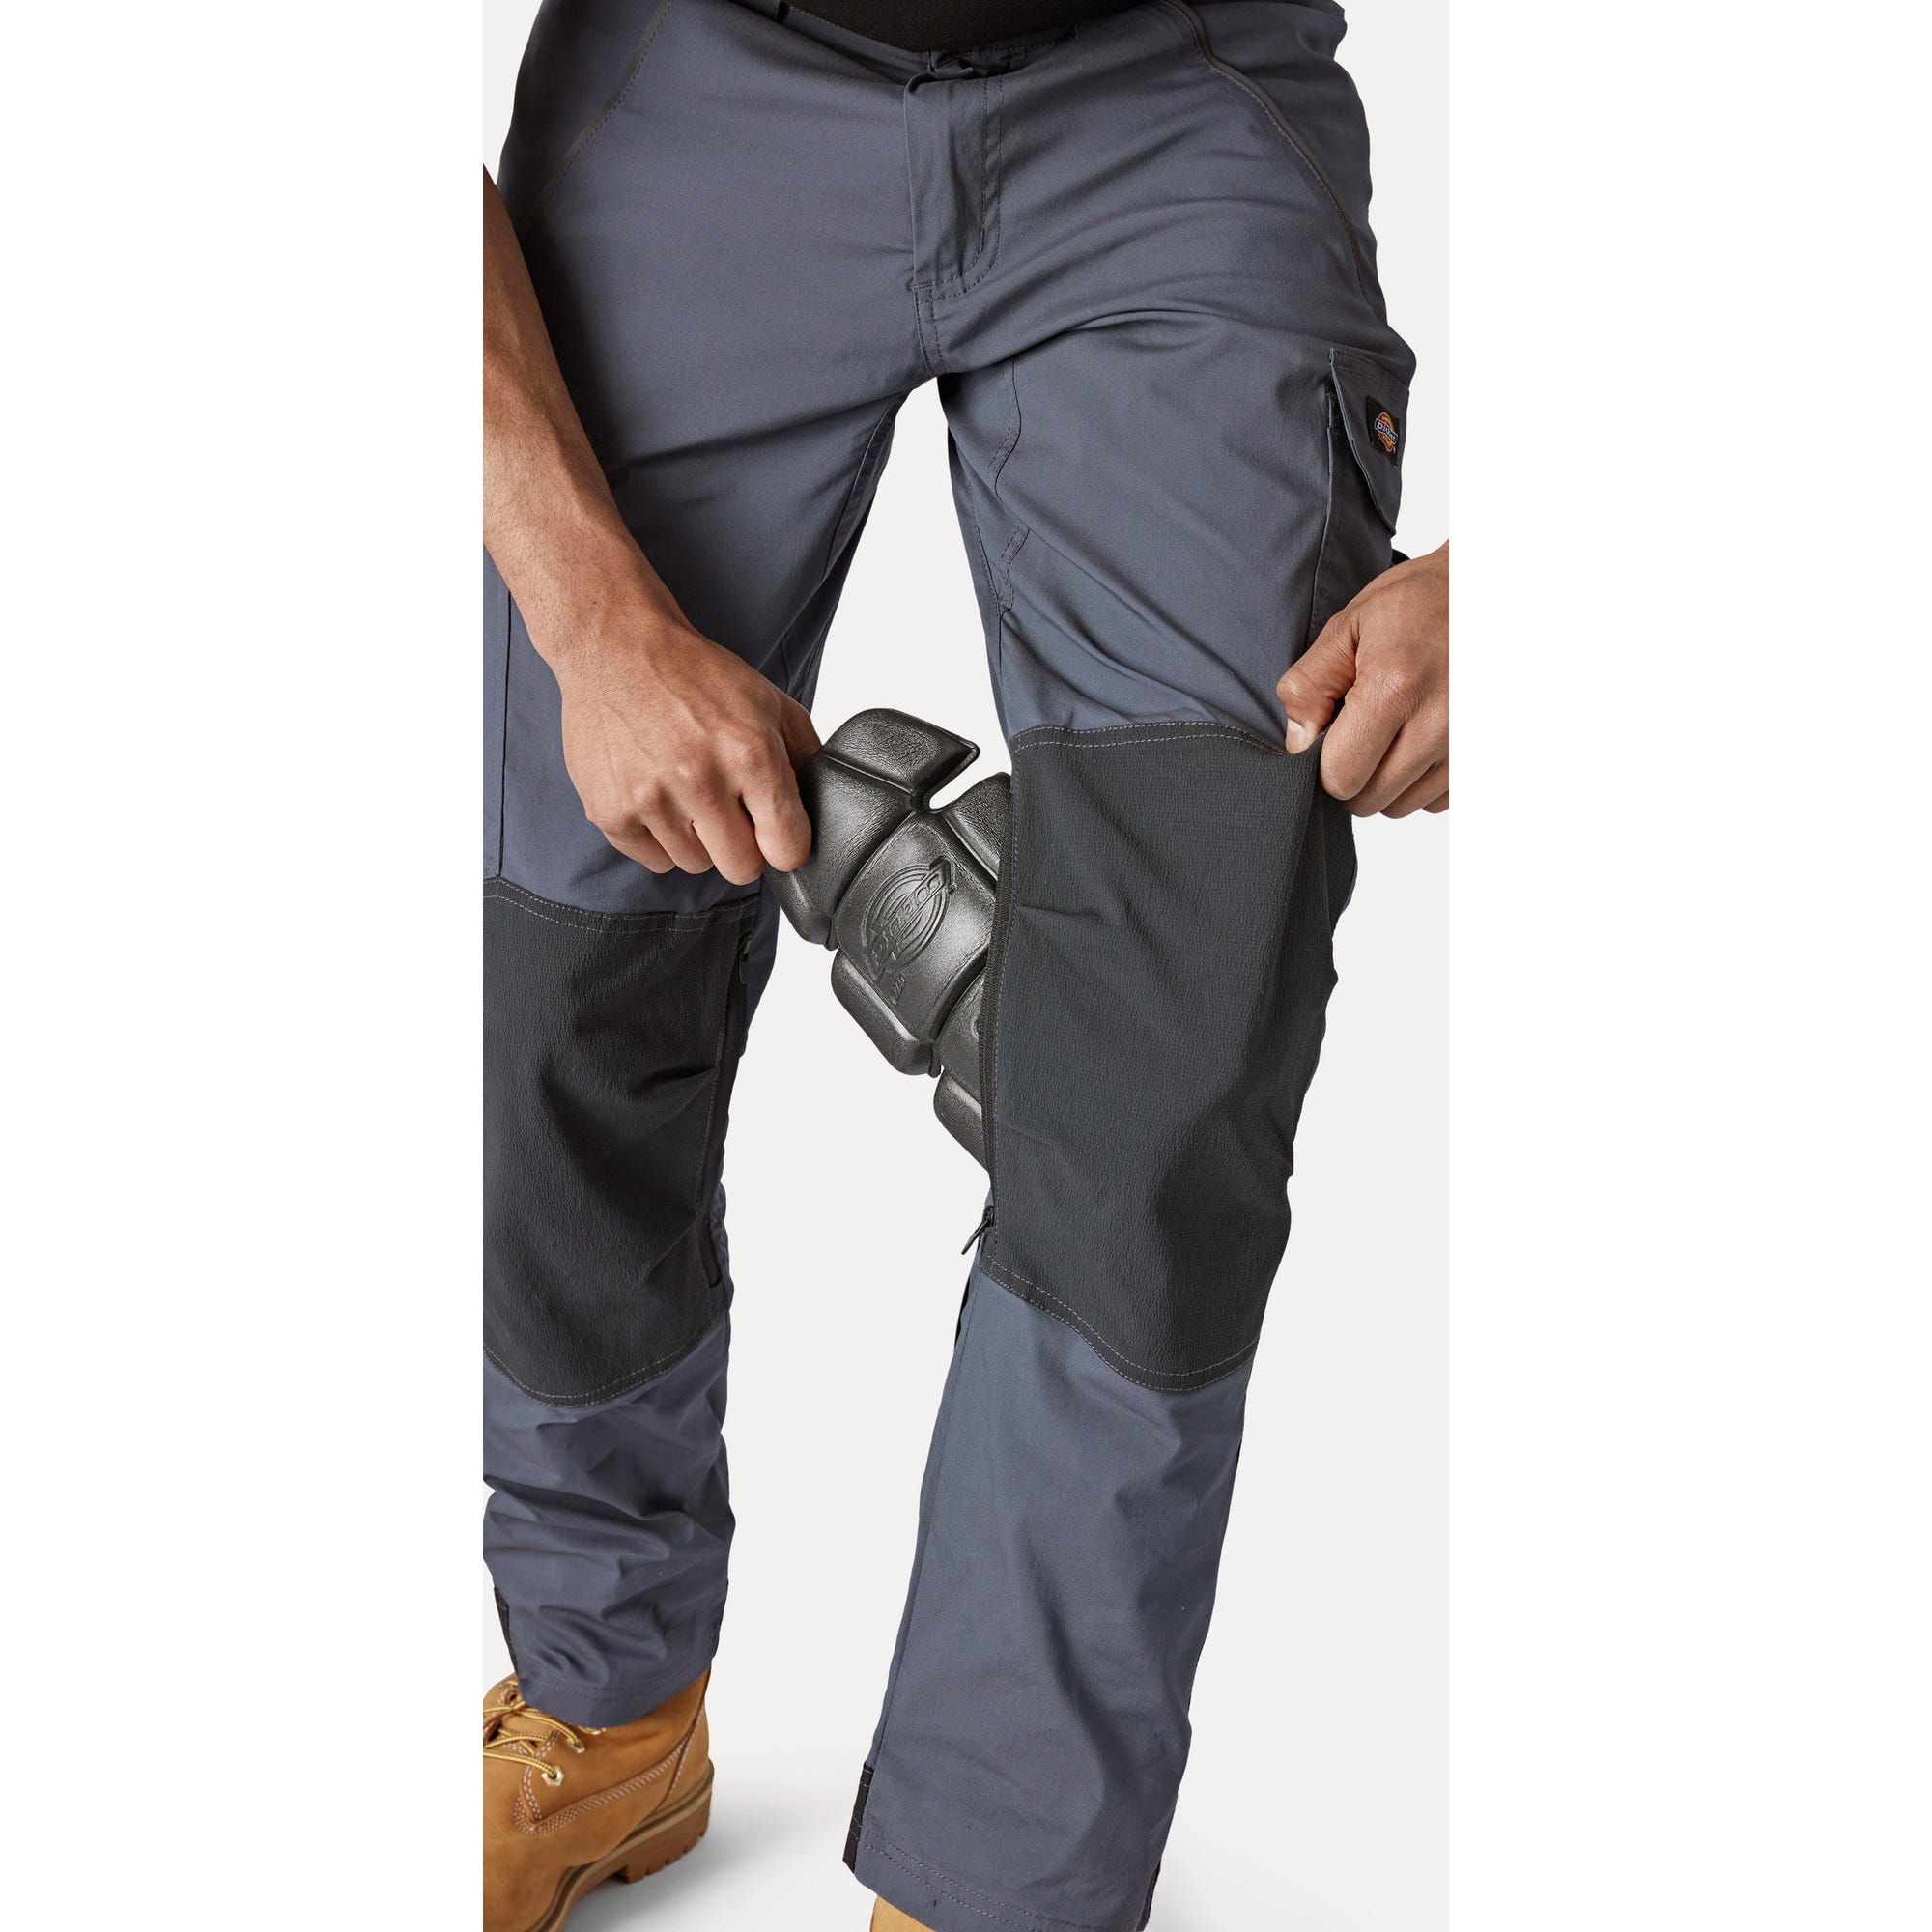 Pantalon léger Flex Gris - Dickies - Taille 44 5